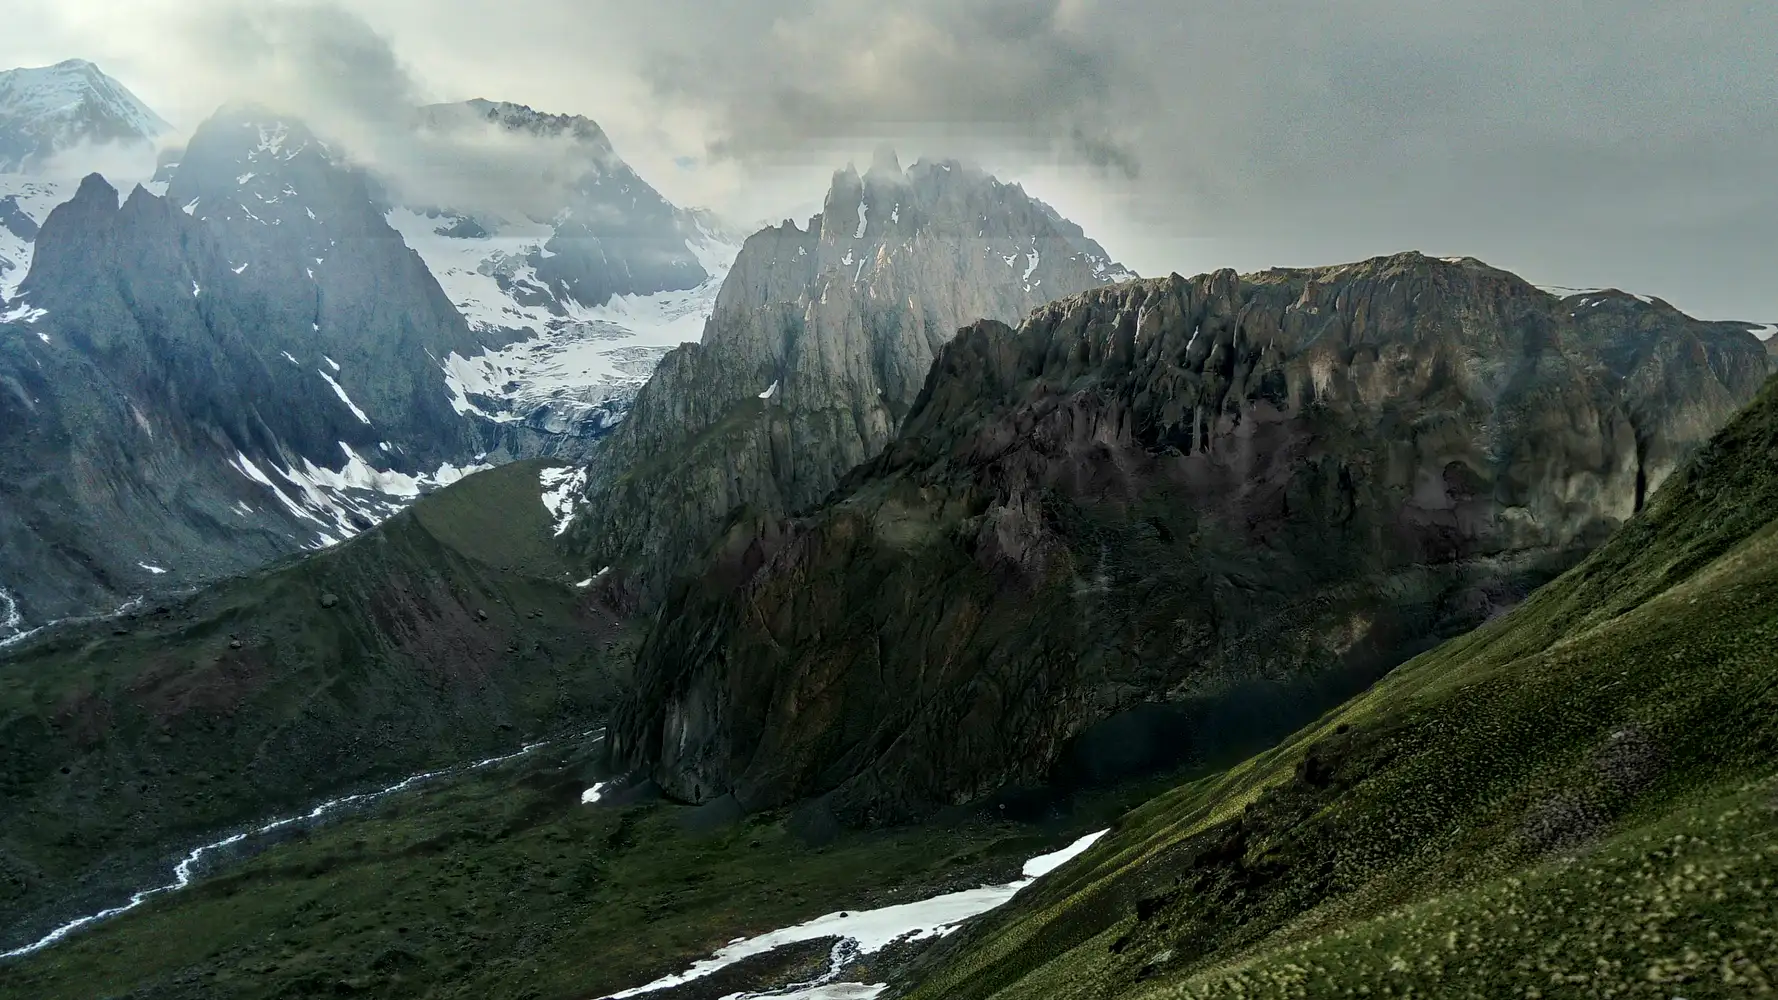 Mount Dzhimara, eighth highest mountain in Europe